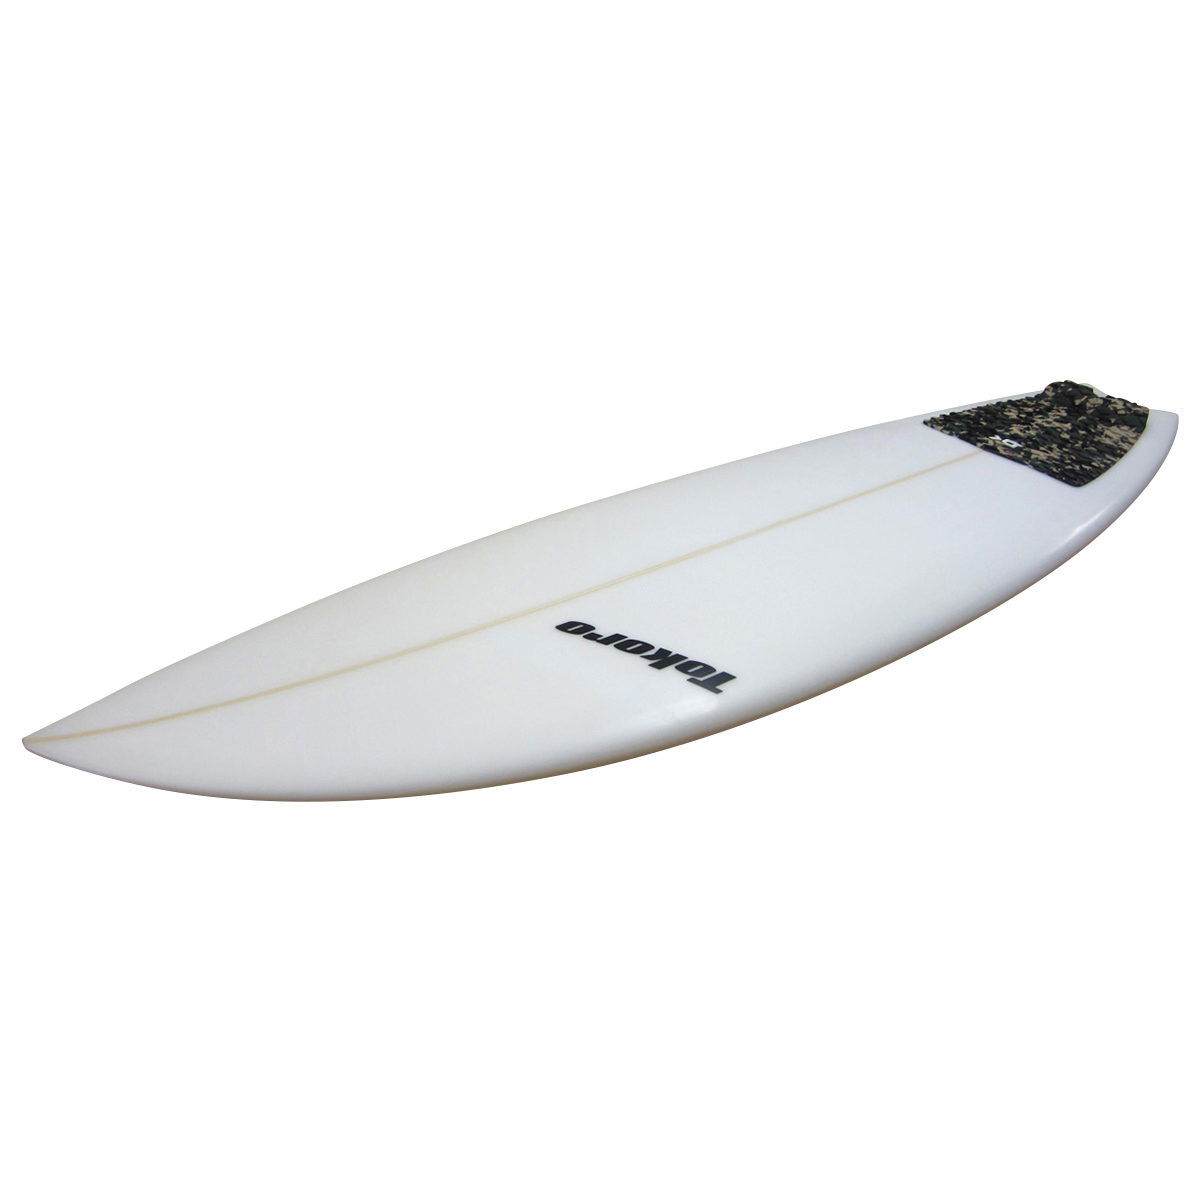 TOKORO SURFBOARDS / SF3 SWALLOW Custom 5`9